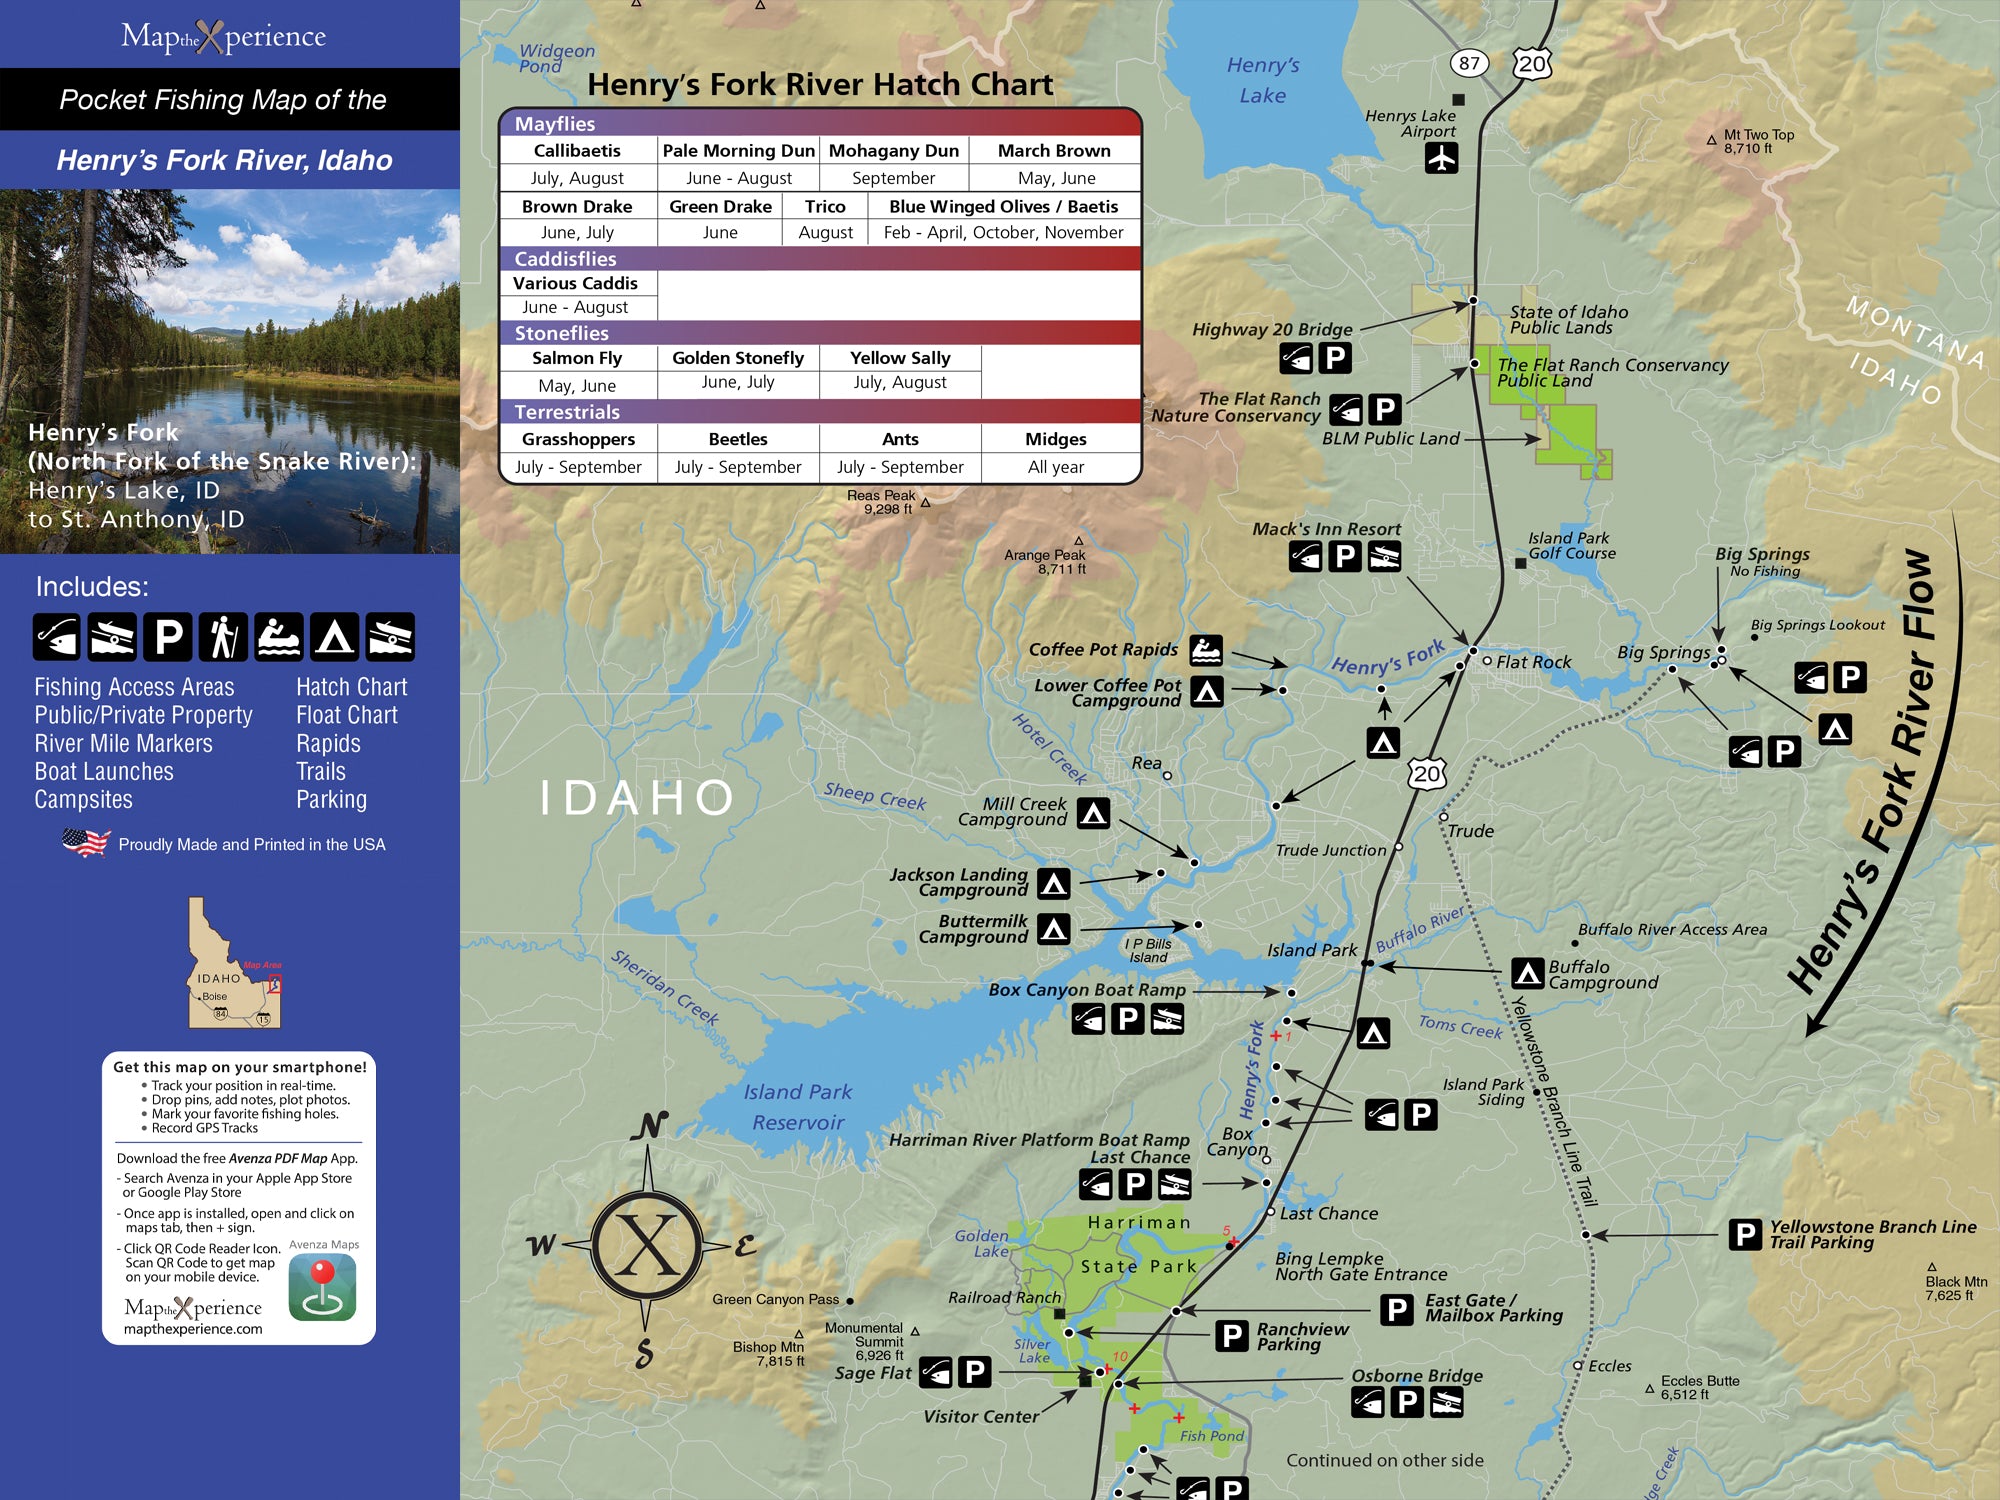 Henry's Fork River, Idaho Pocket Fishing Map